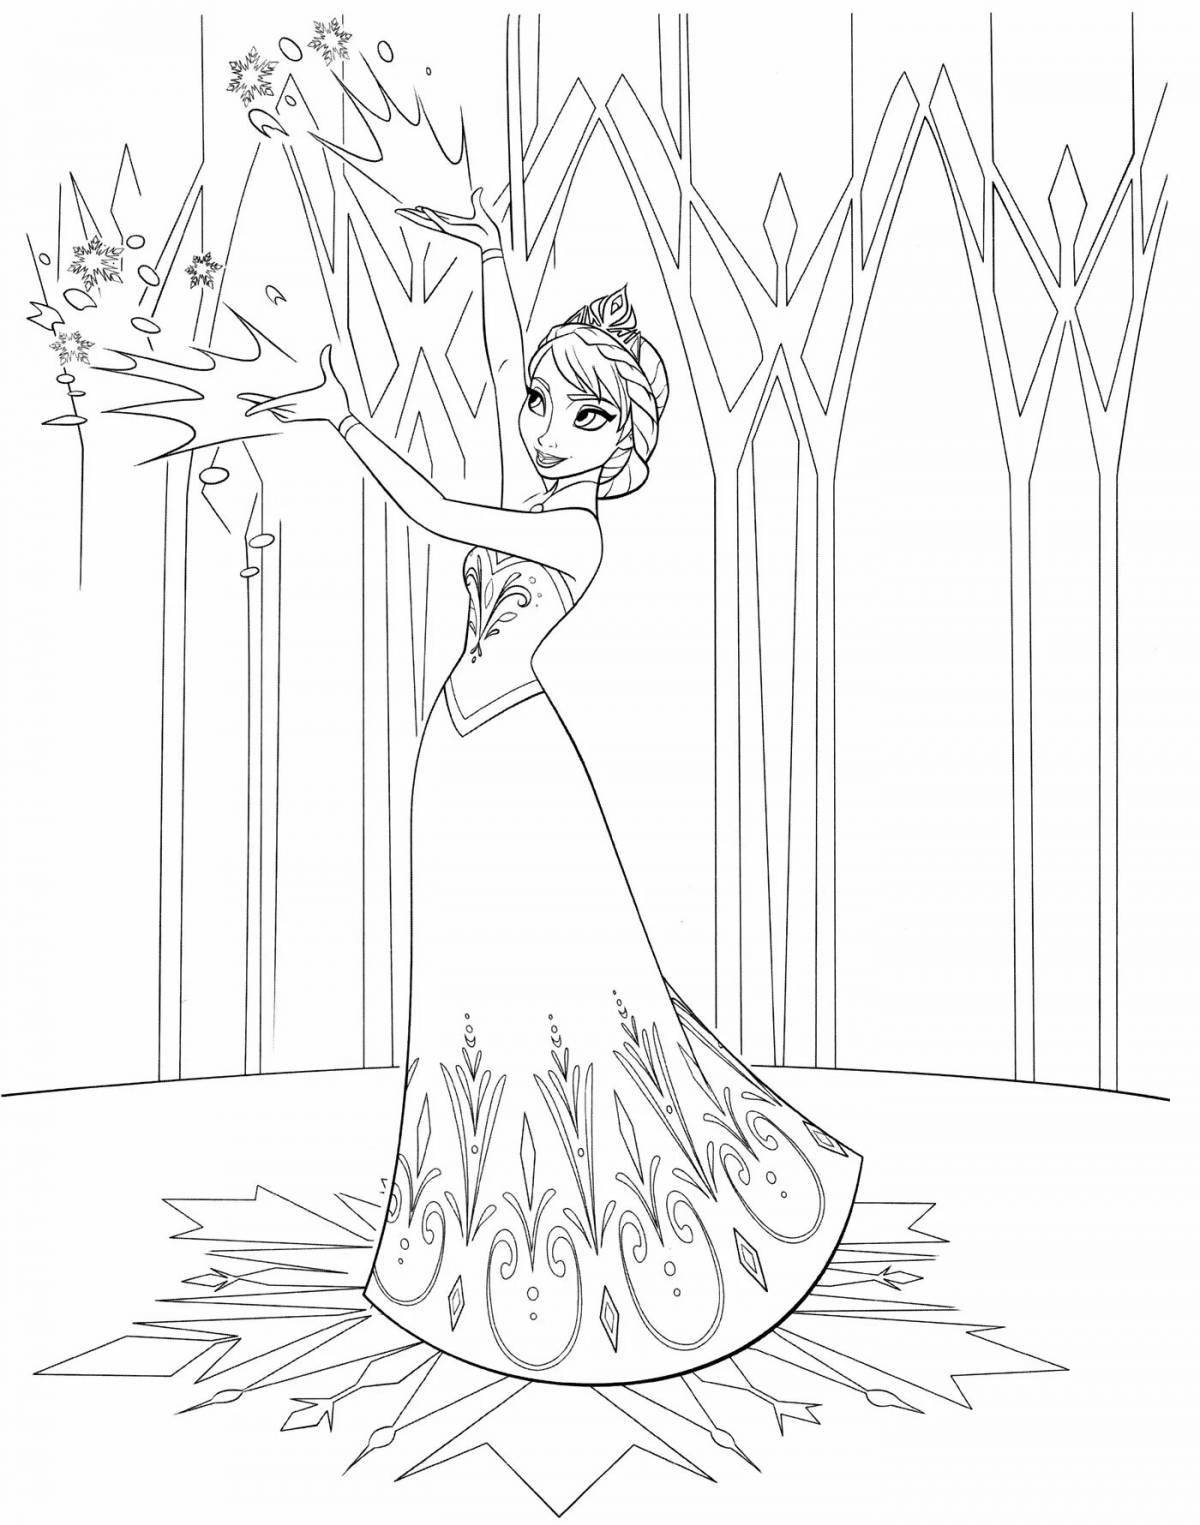 Children's Snow Queen coloring book for girls